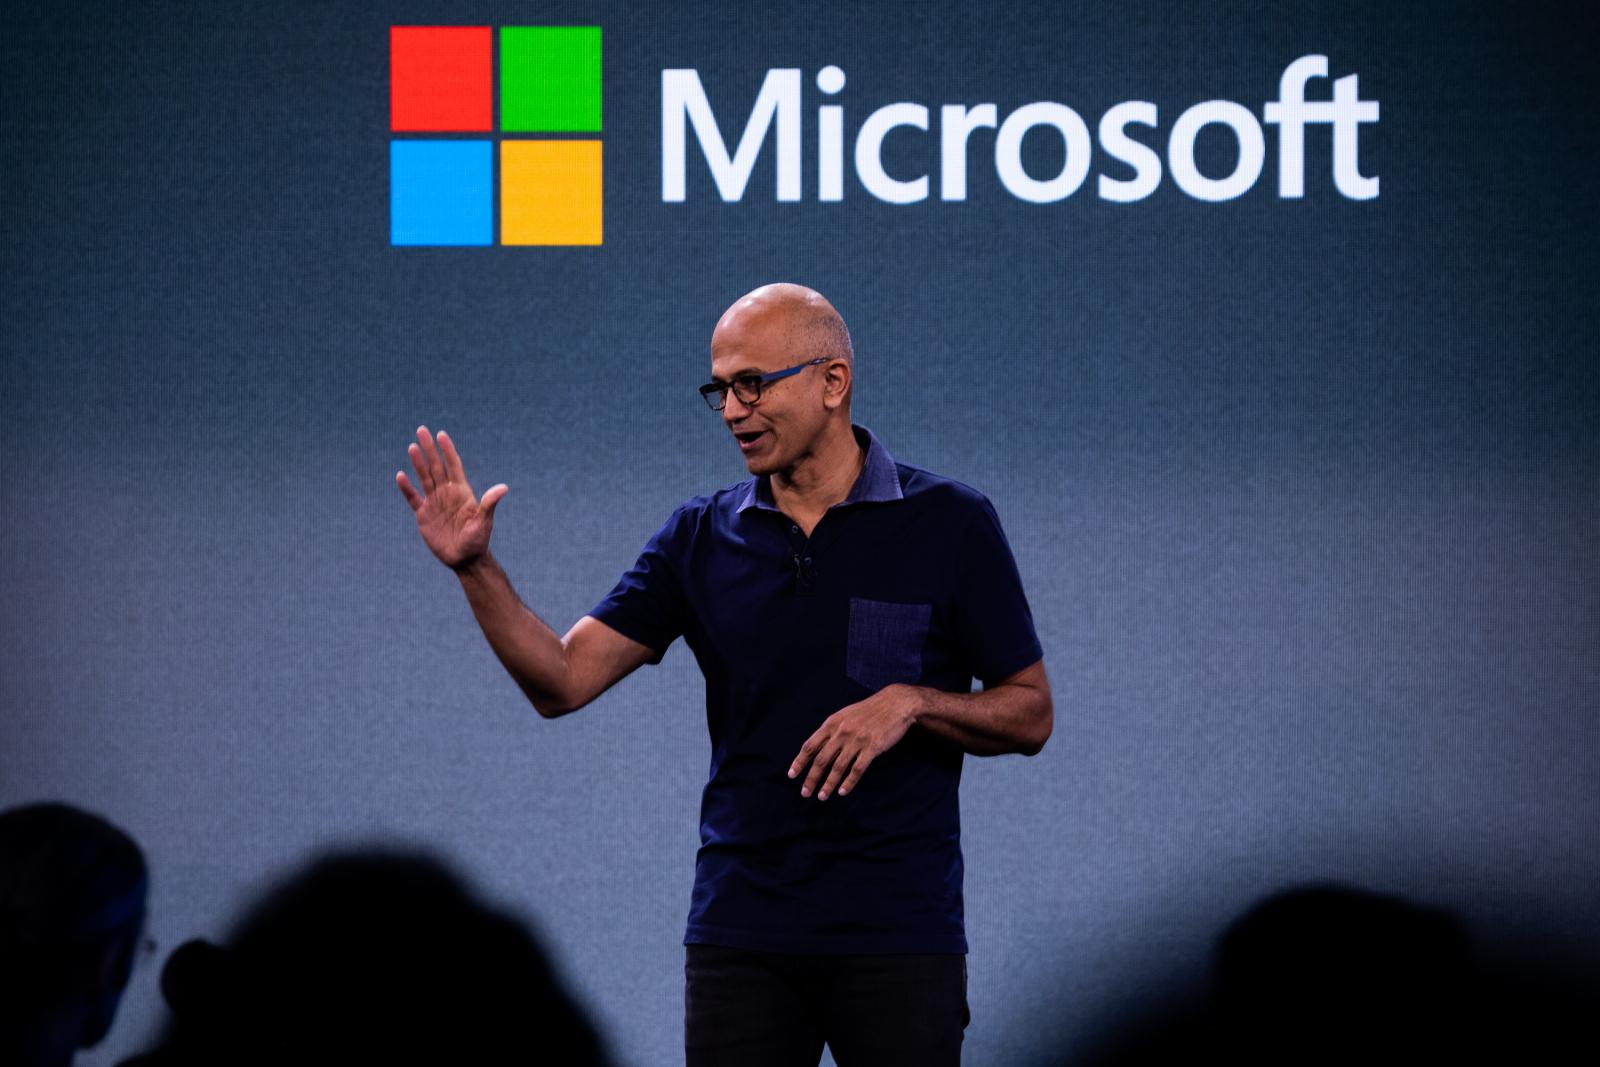 Microsoft CEO Satya Nadella suggests that Sam Altman might return to OpenAI